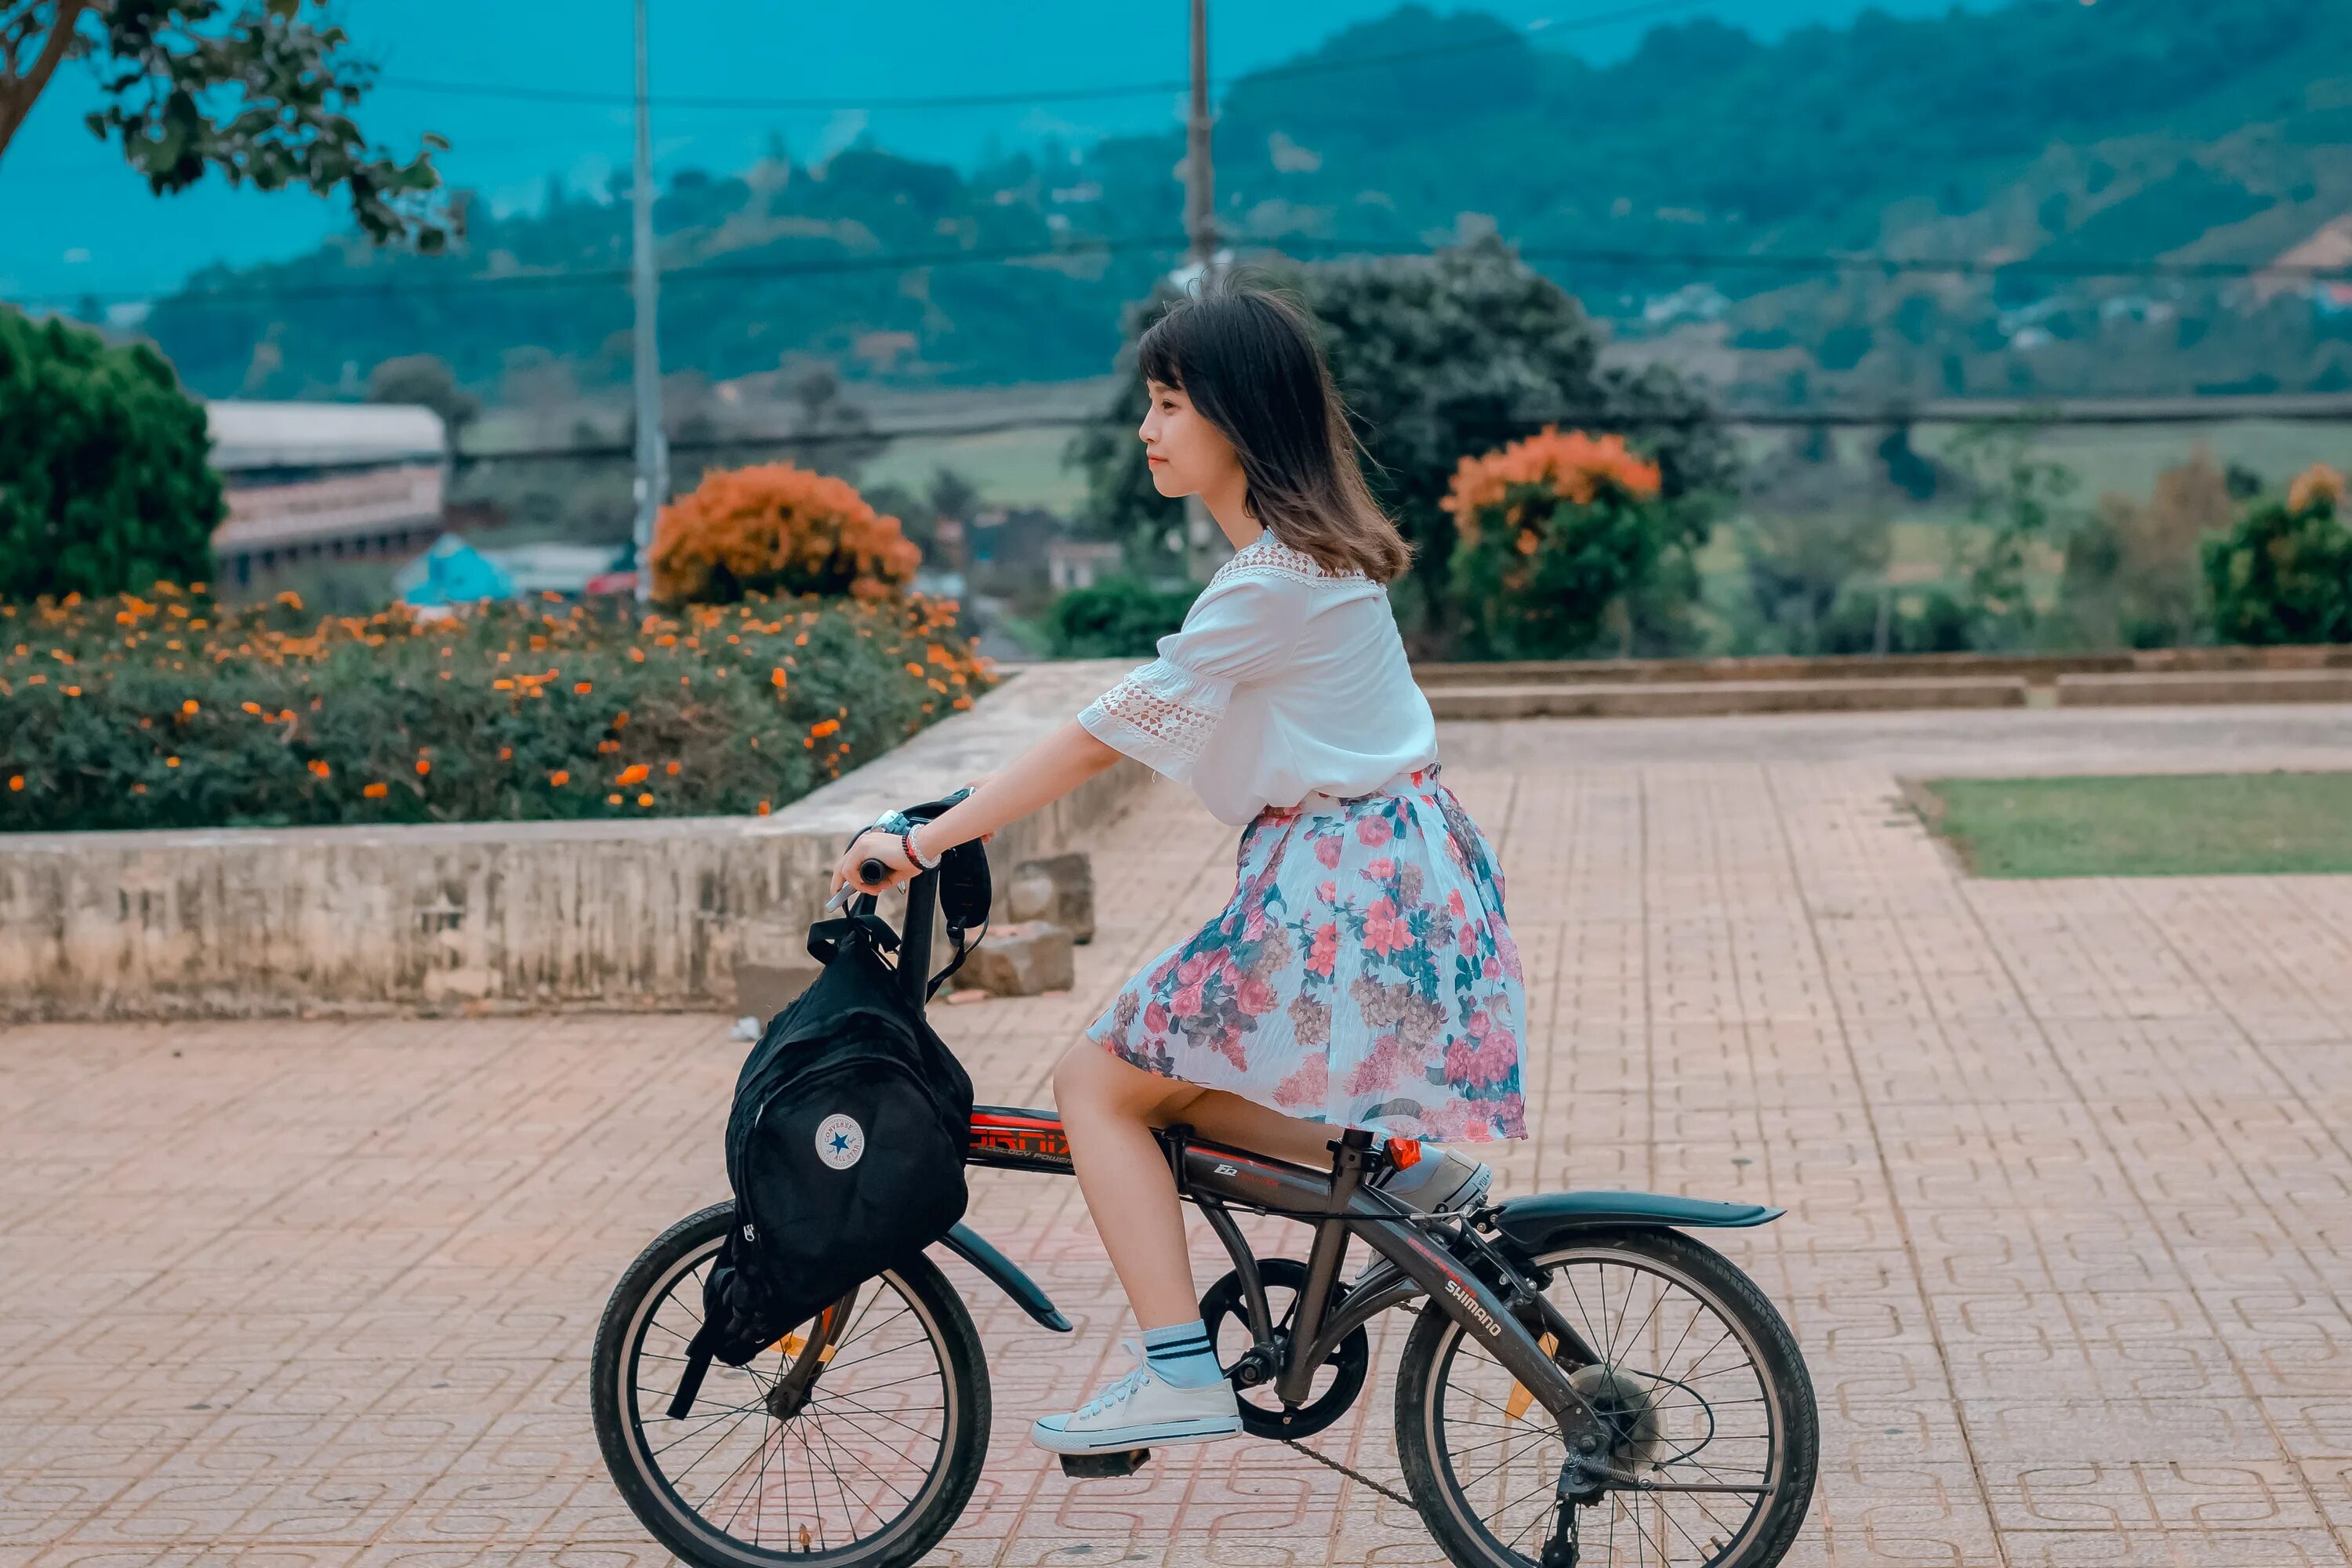 She her bike when she her. Девушка едет на велосипеде. Девочка катается на велосипеде. Маленькая девочка едет на велосипеде. Девушка садится на велосипед.